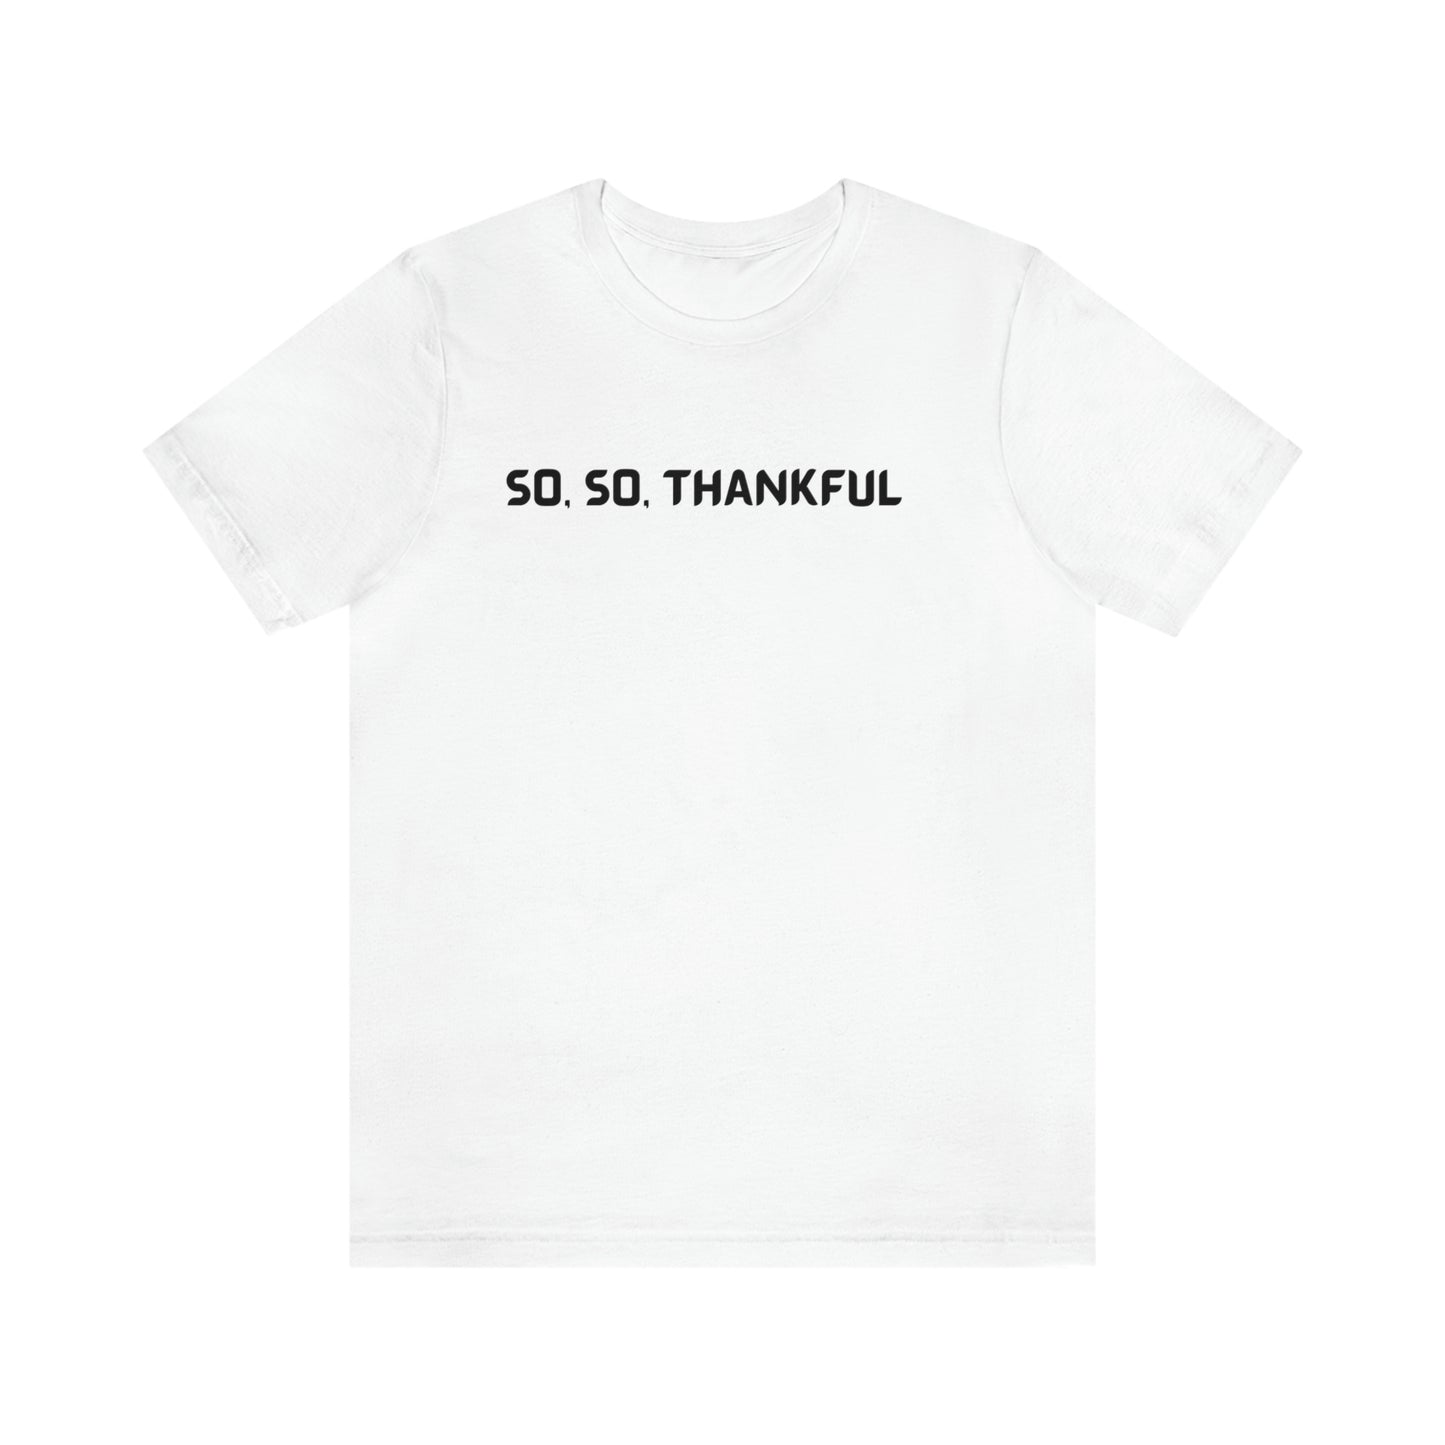 So, so thankful unisex inspirational quote t shrt, t shirt expressing gratitude